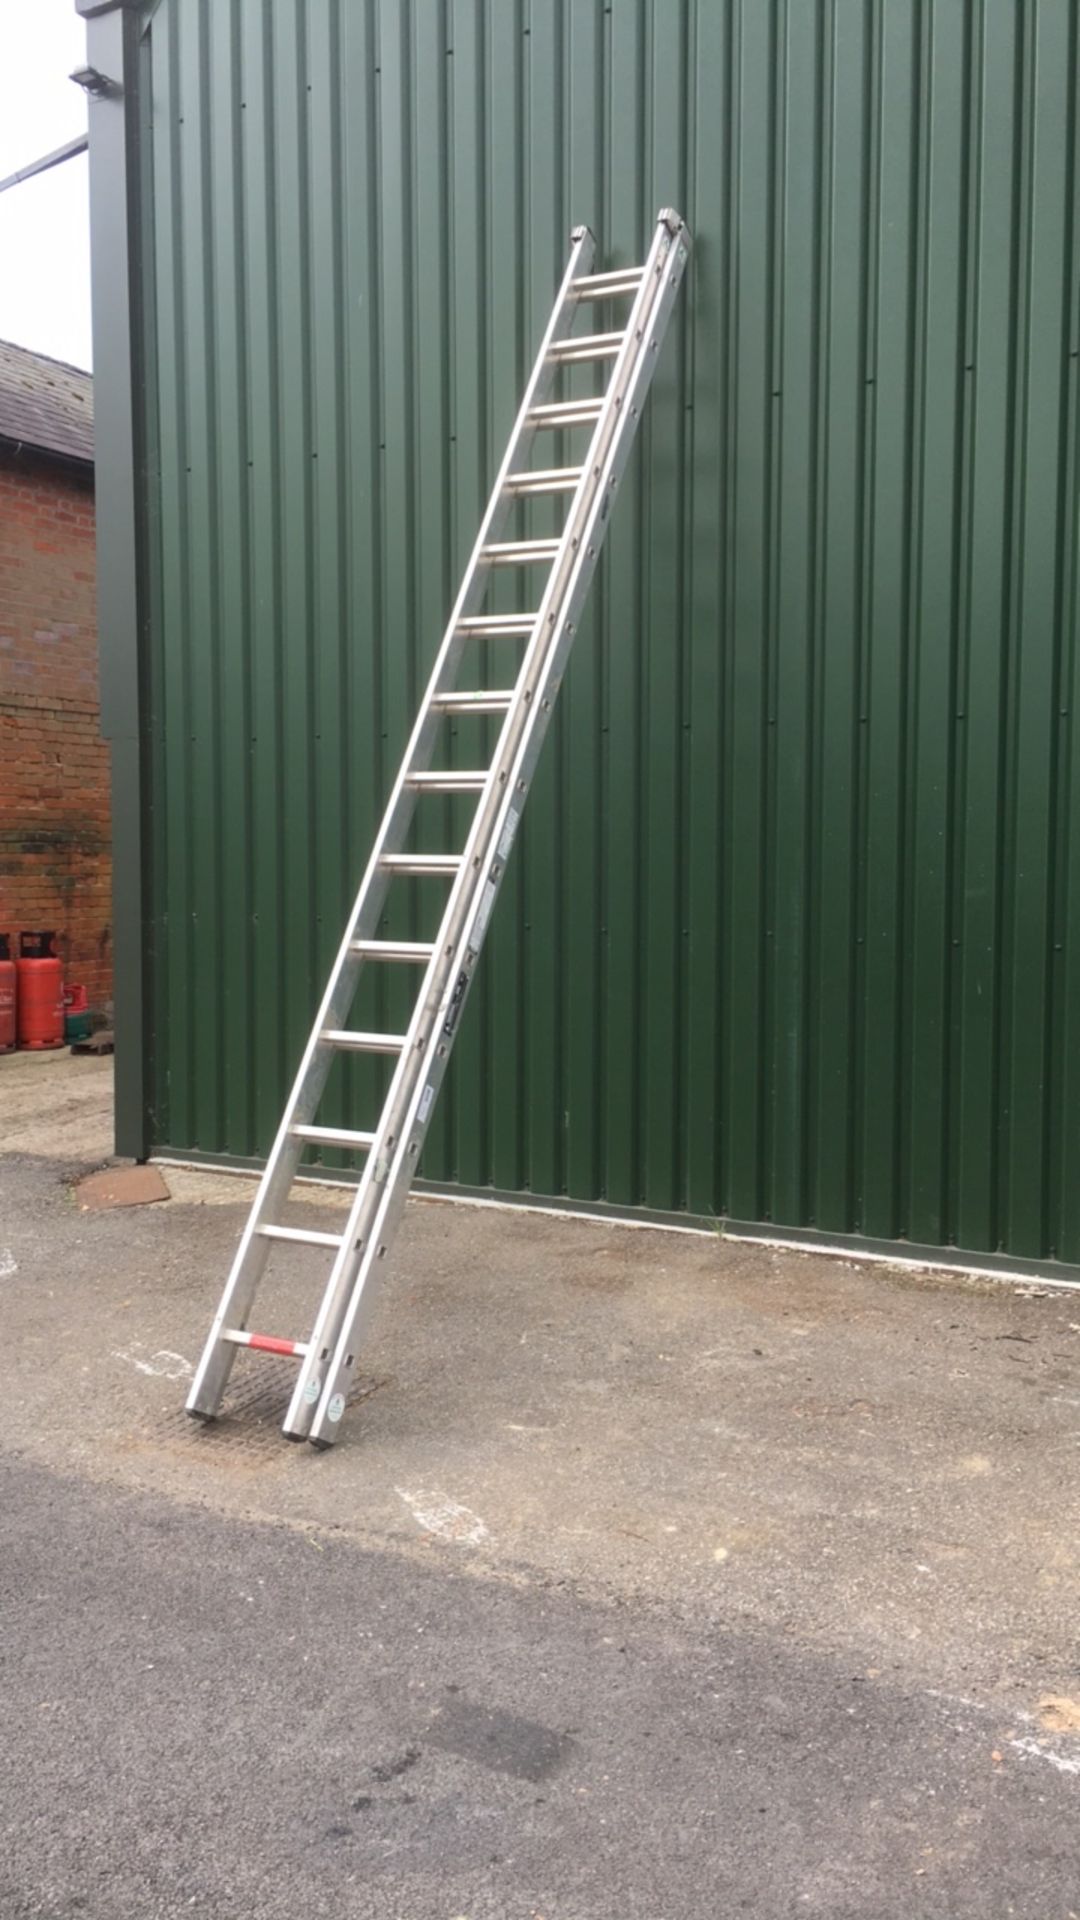 Youngman aluminium ladder 2 section 4.1m